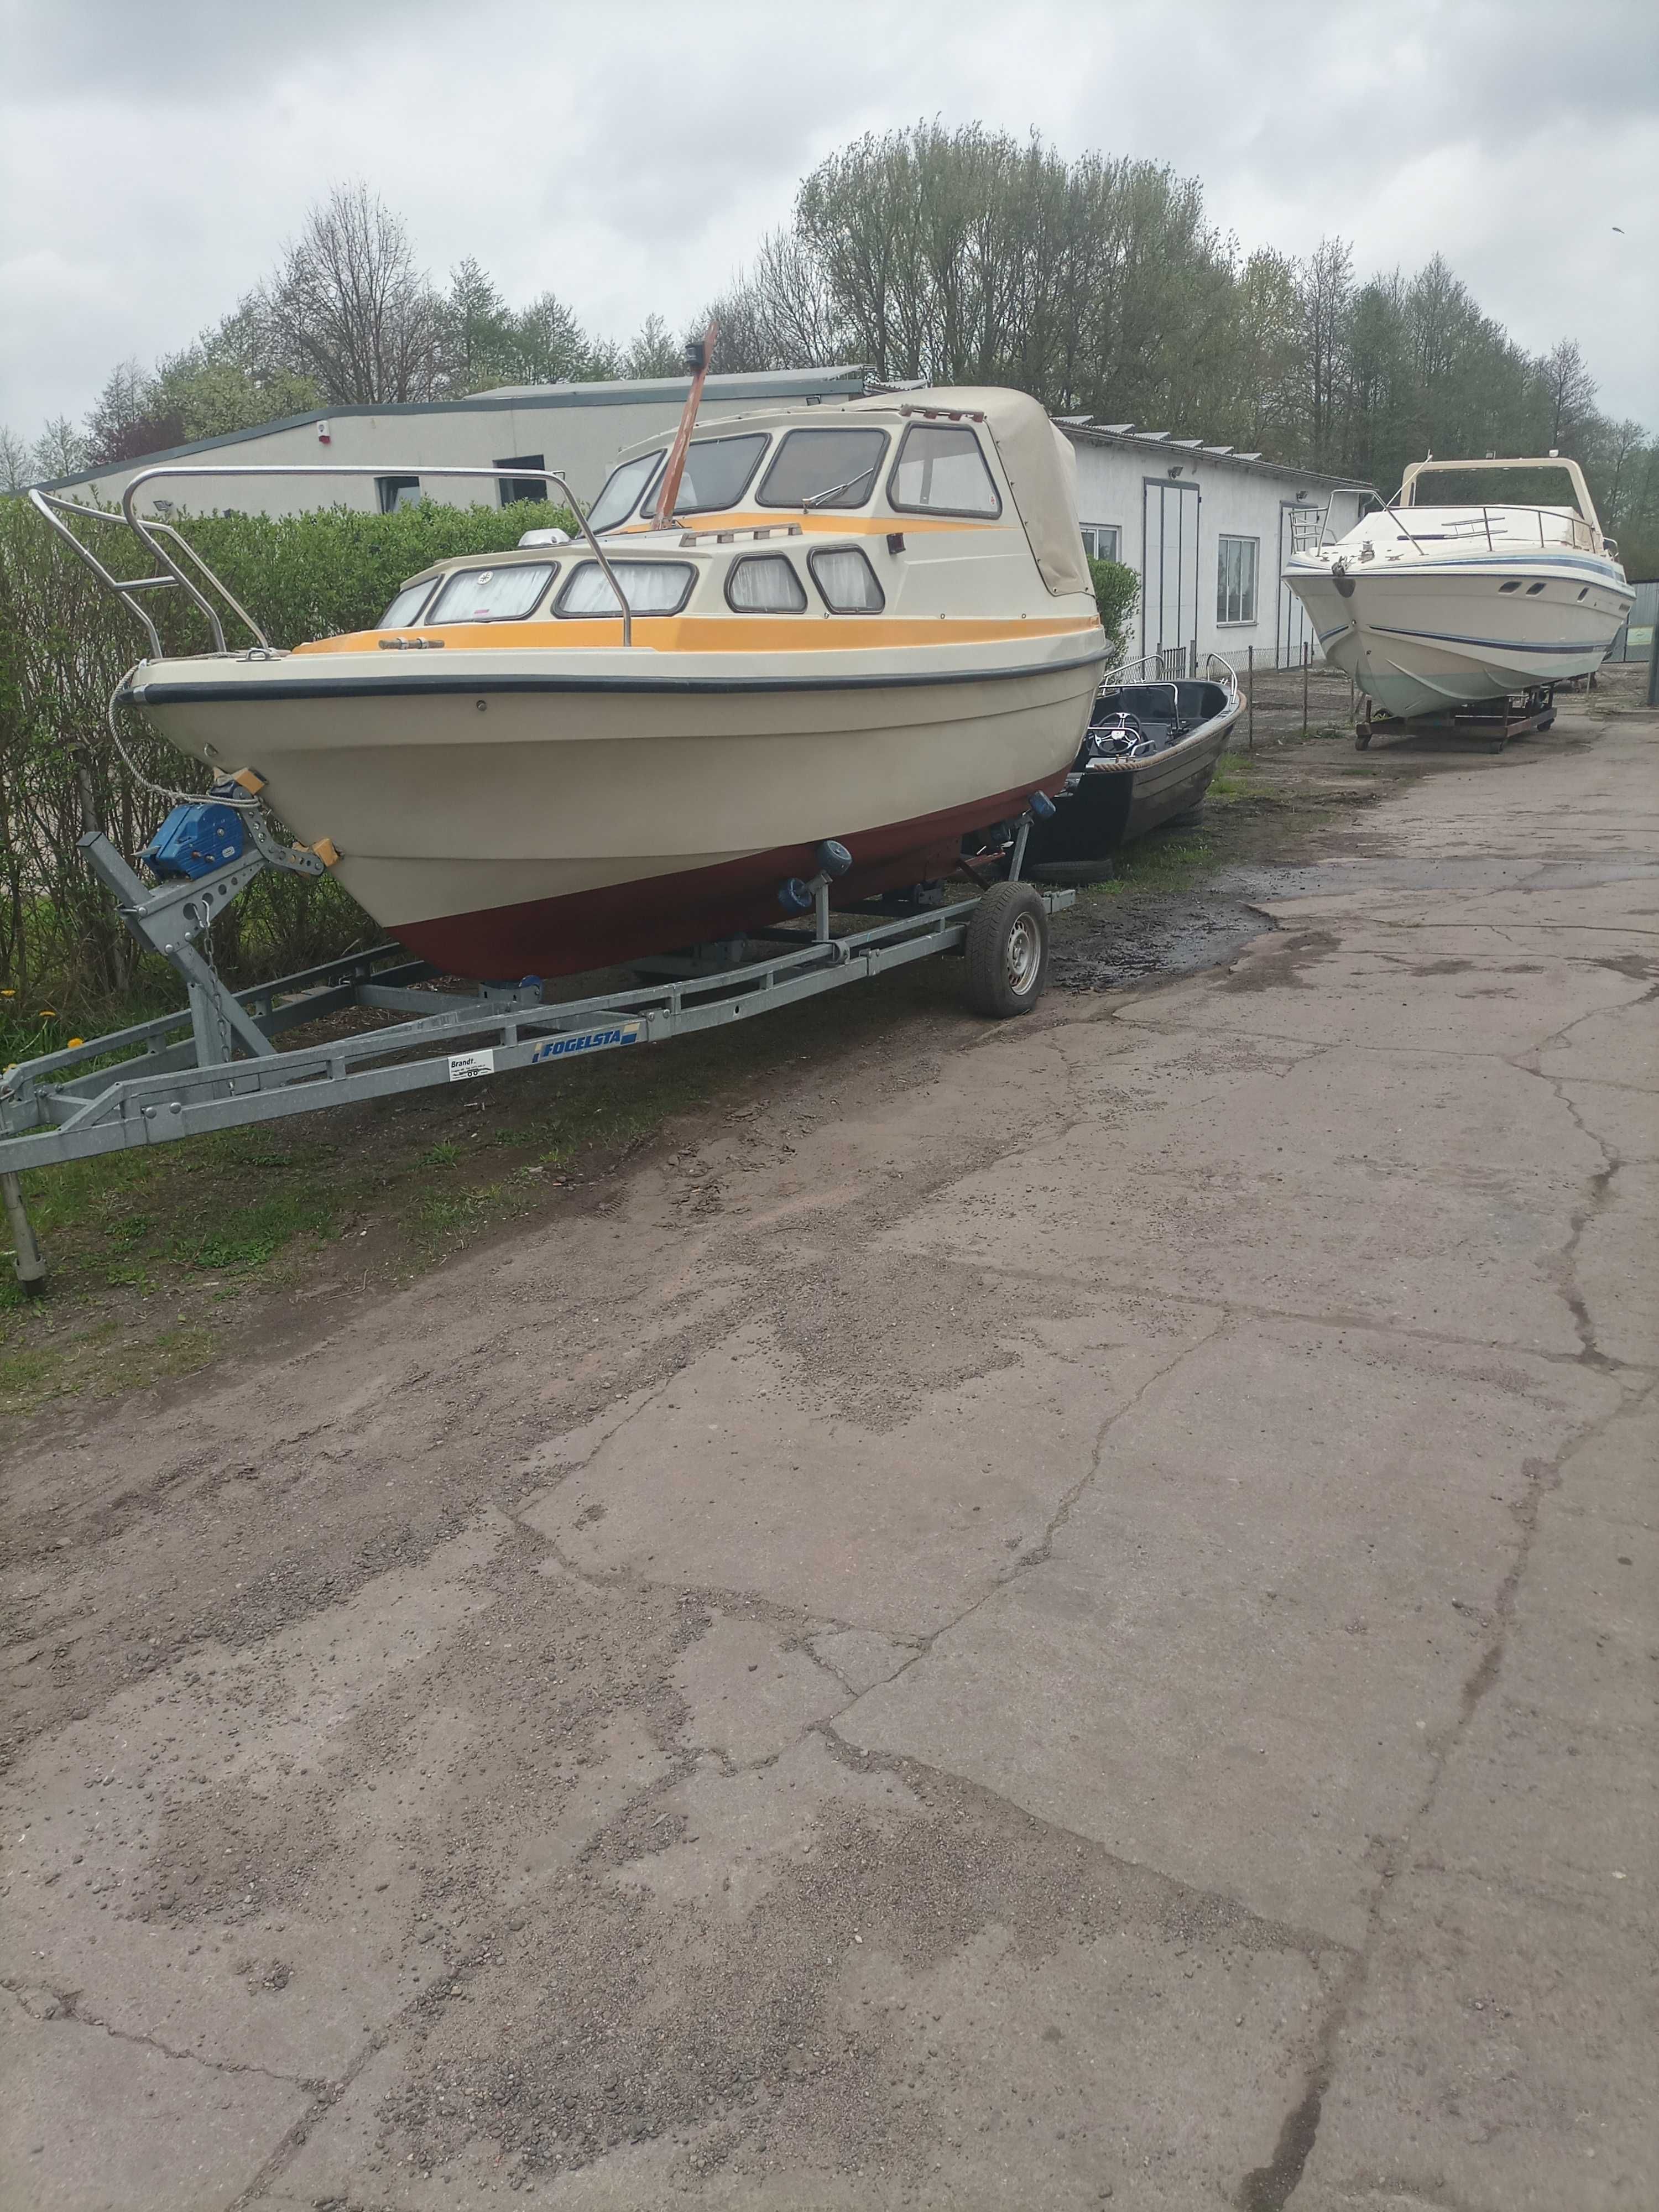 Łódź kabinowa, motorowa, houseboat ADEC 720 ,DIESEL VP